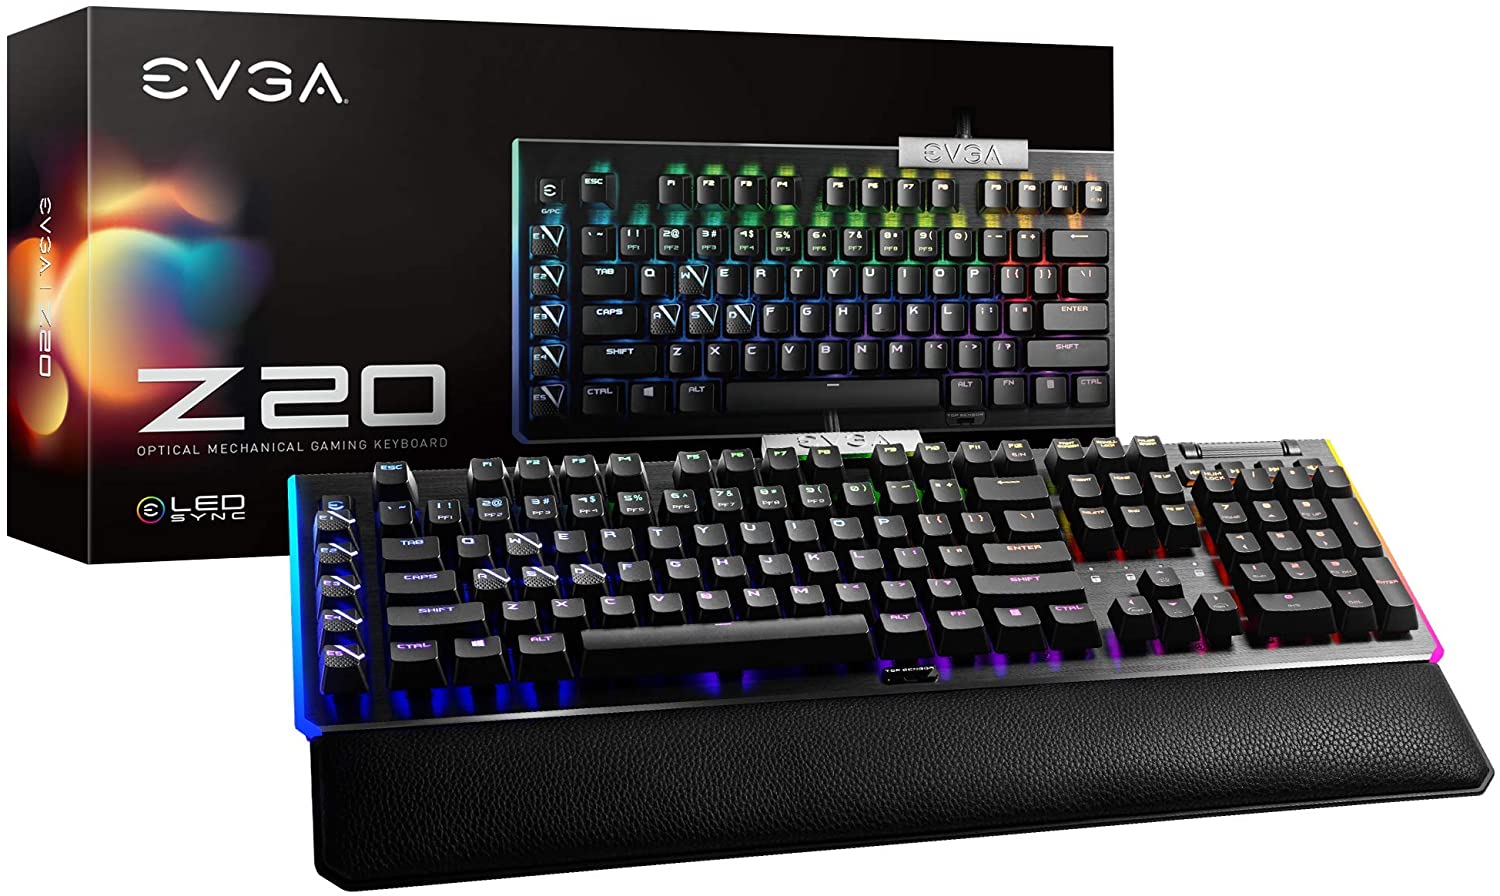 Top 8 Best Gaming Keyboards Under $100